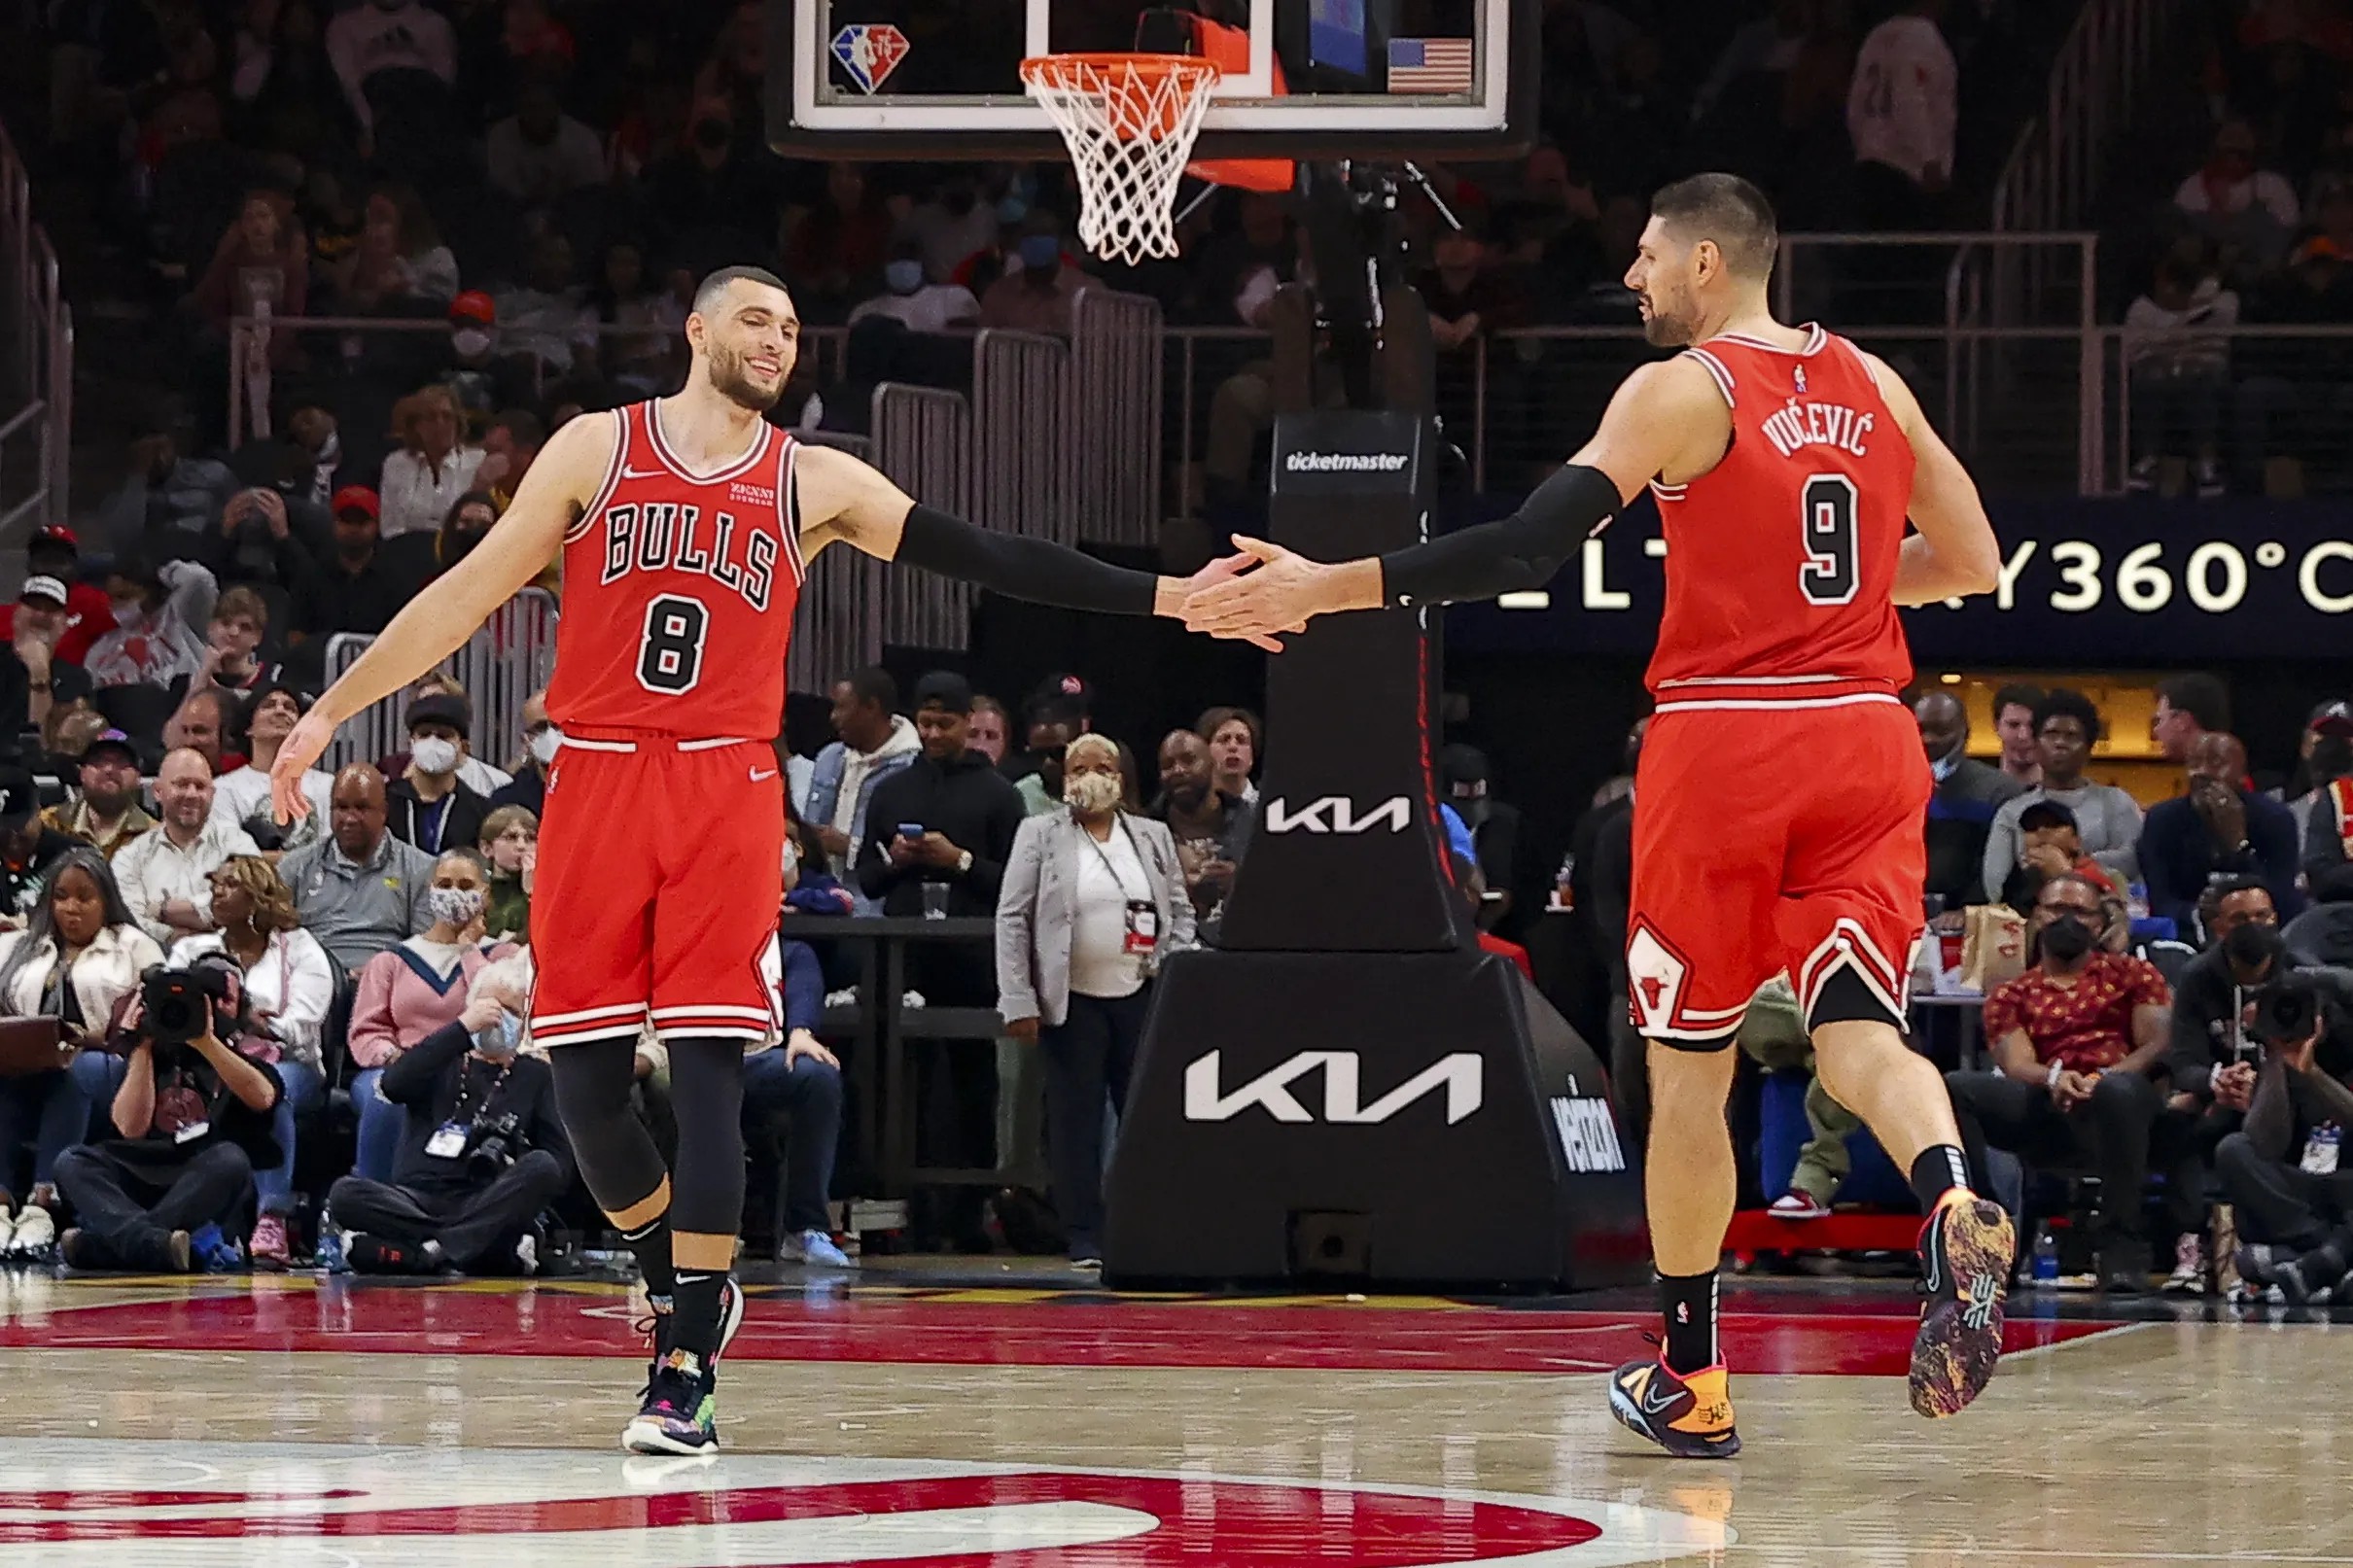 Bulls vs. Hawks final score Chicago’s big 3 combines for 89 points in